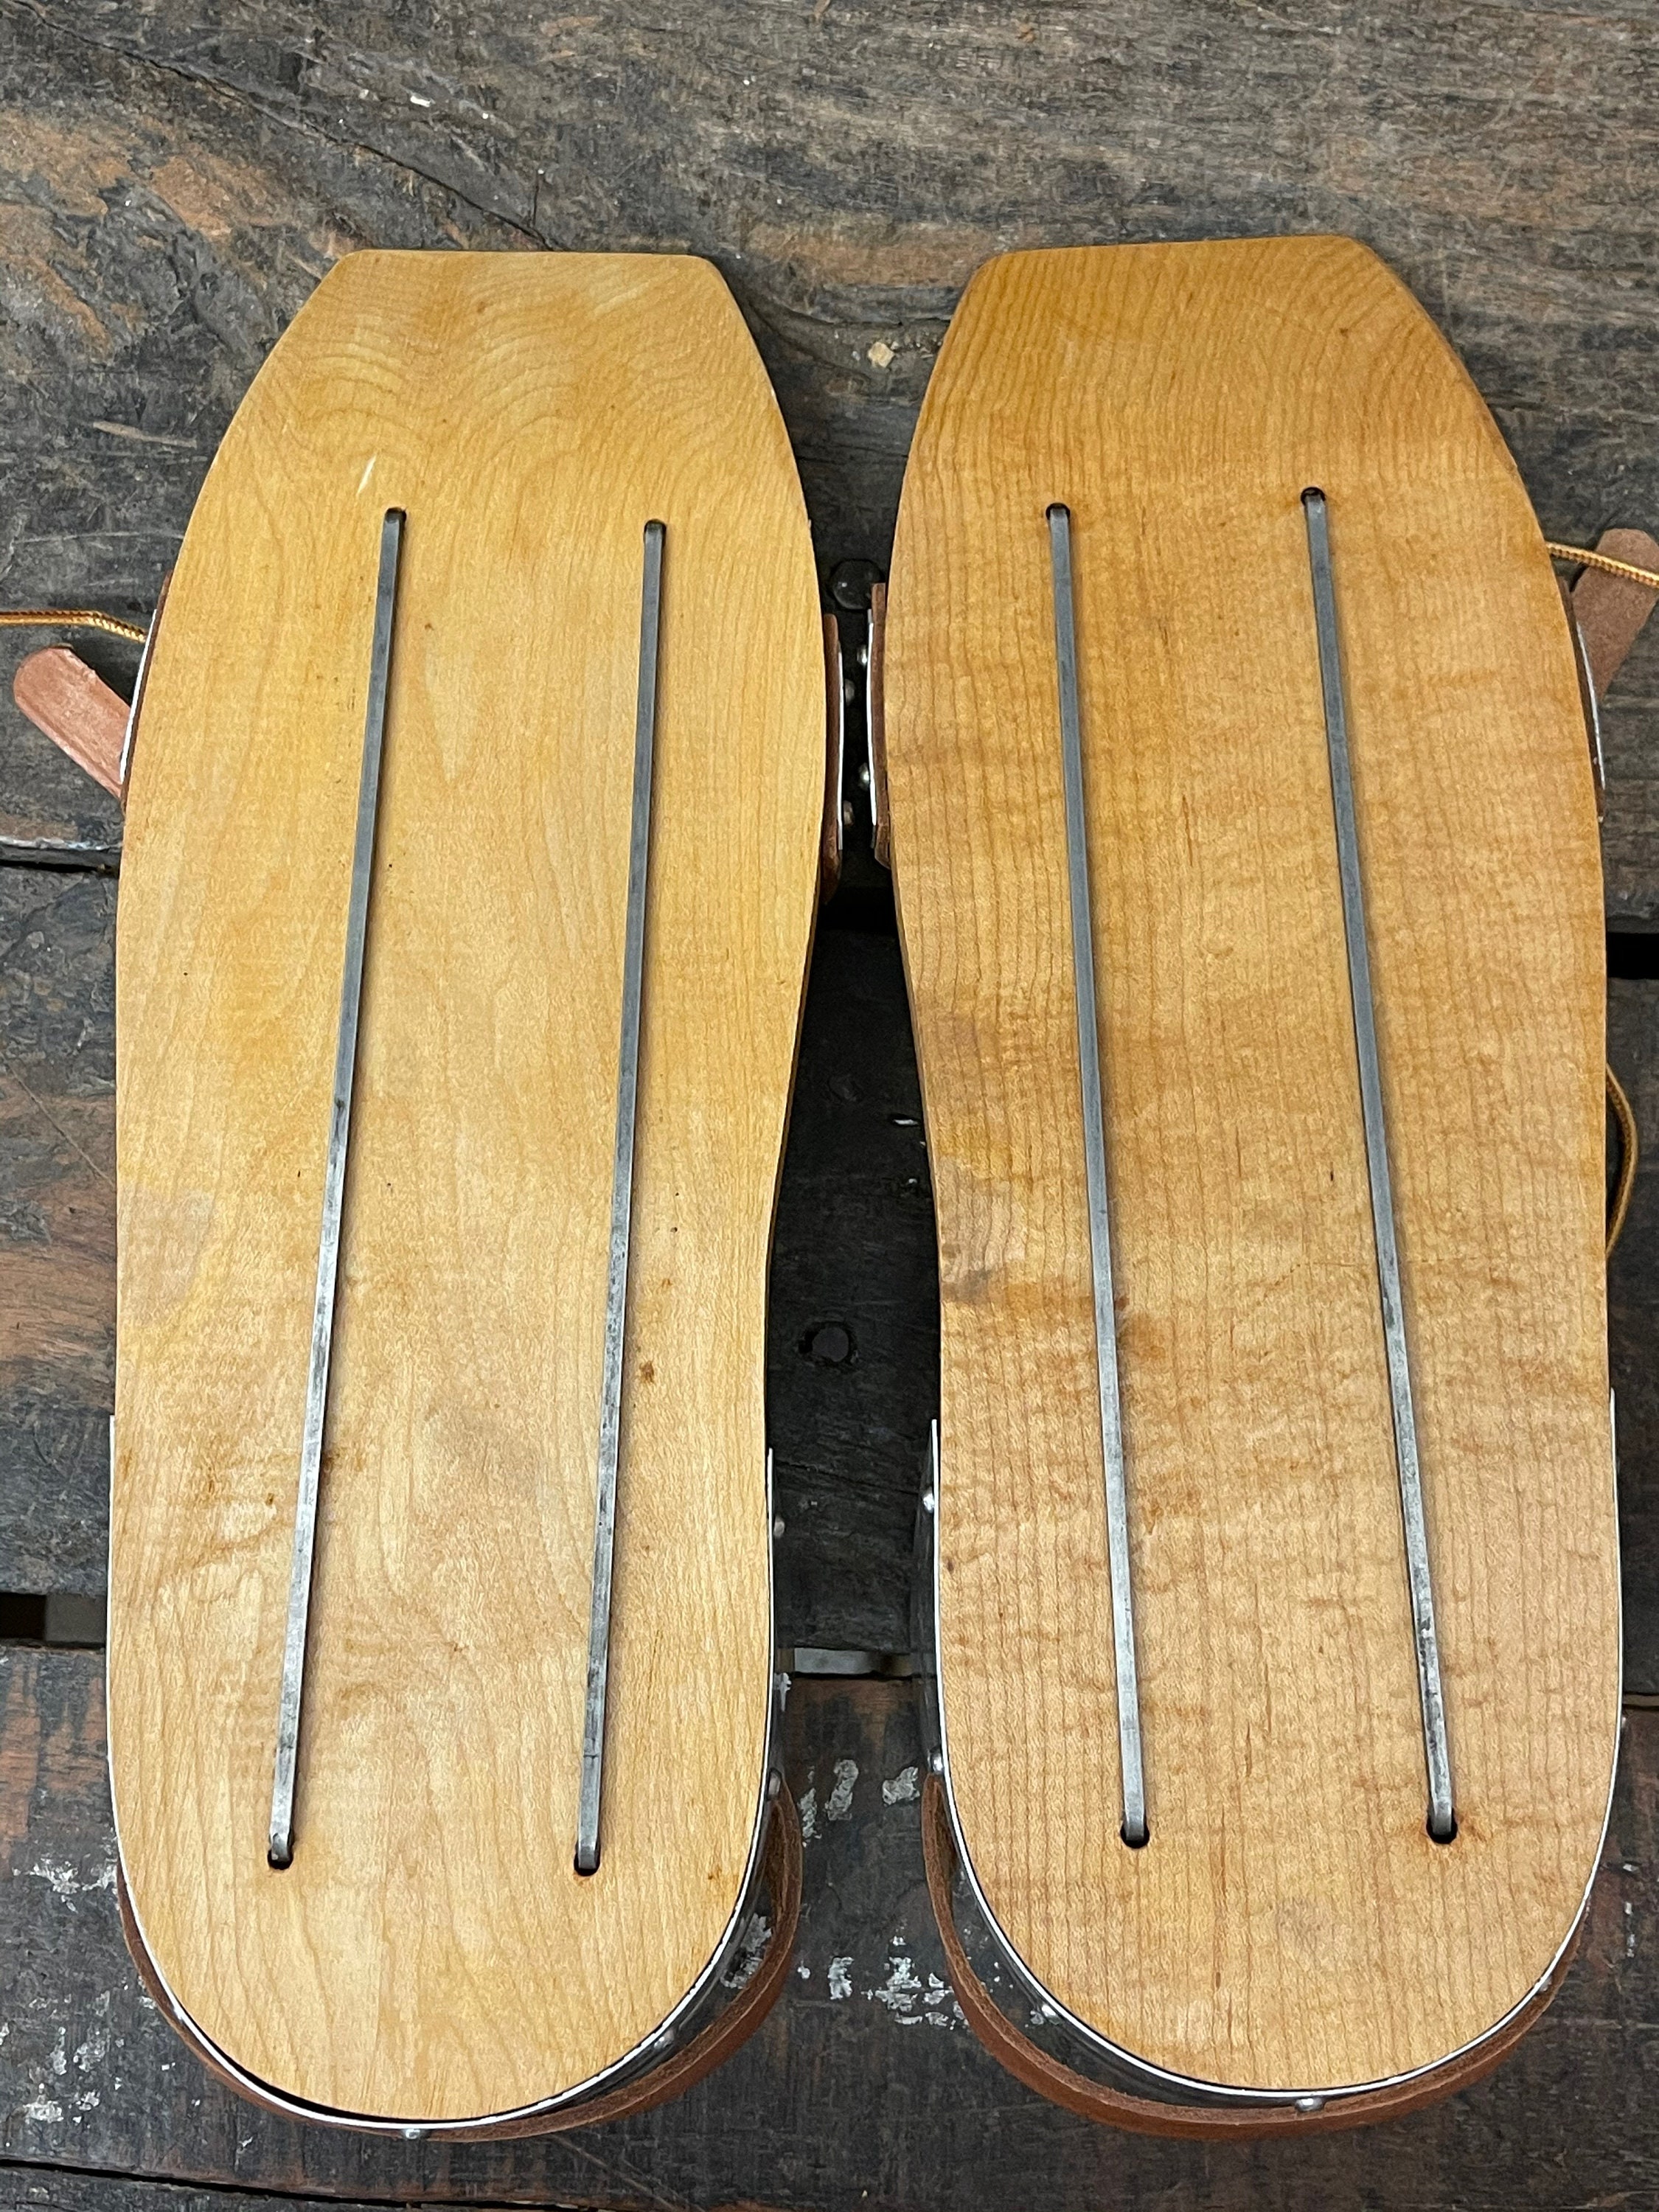 Vintage Skee Skates From Herold Corporation of Wisconsin Rare 1960s Ski Novelty Shoes